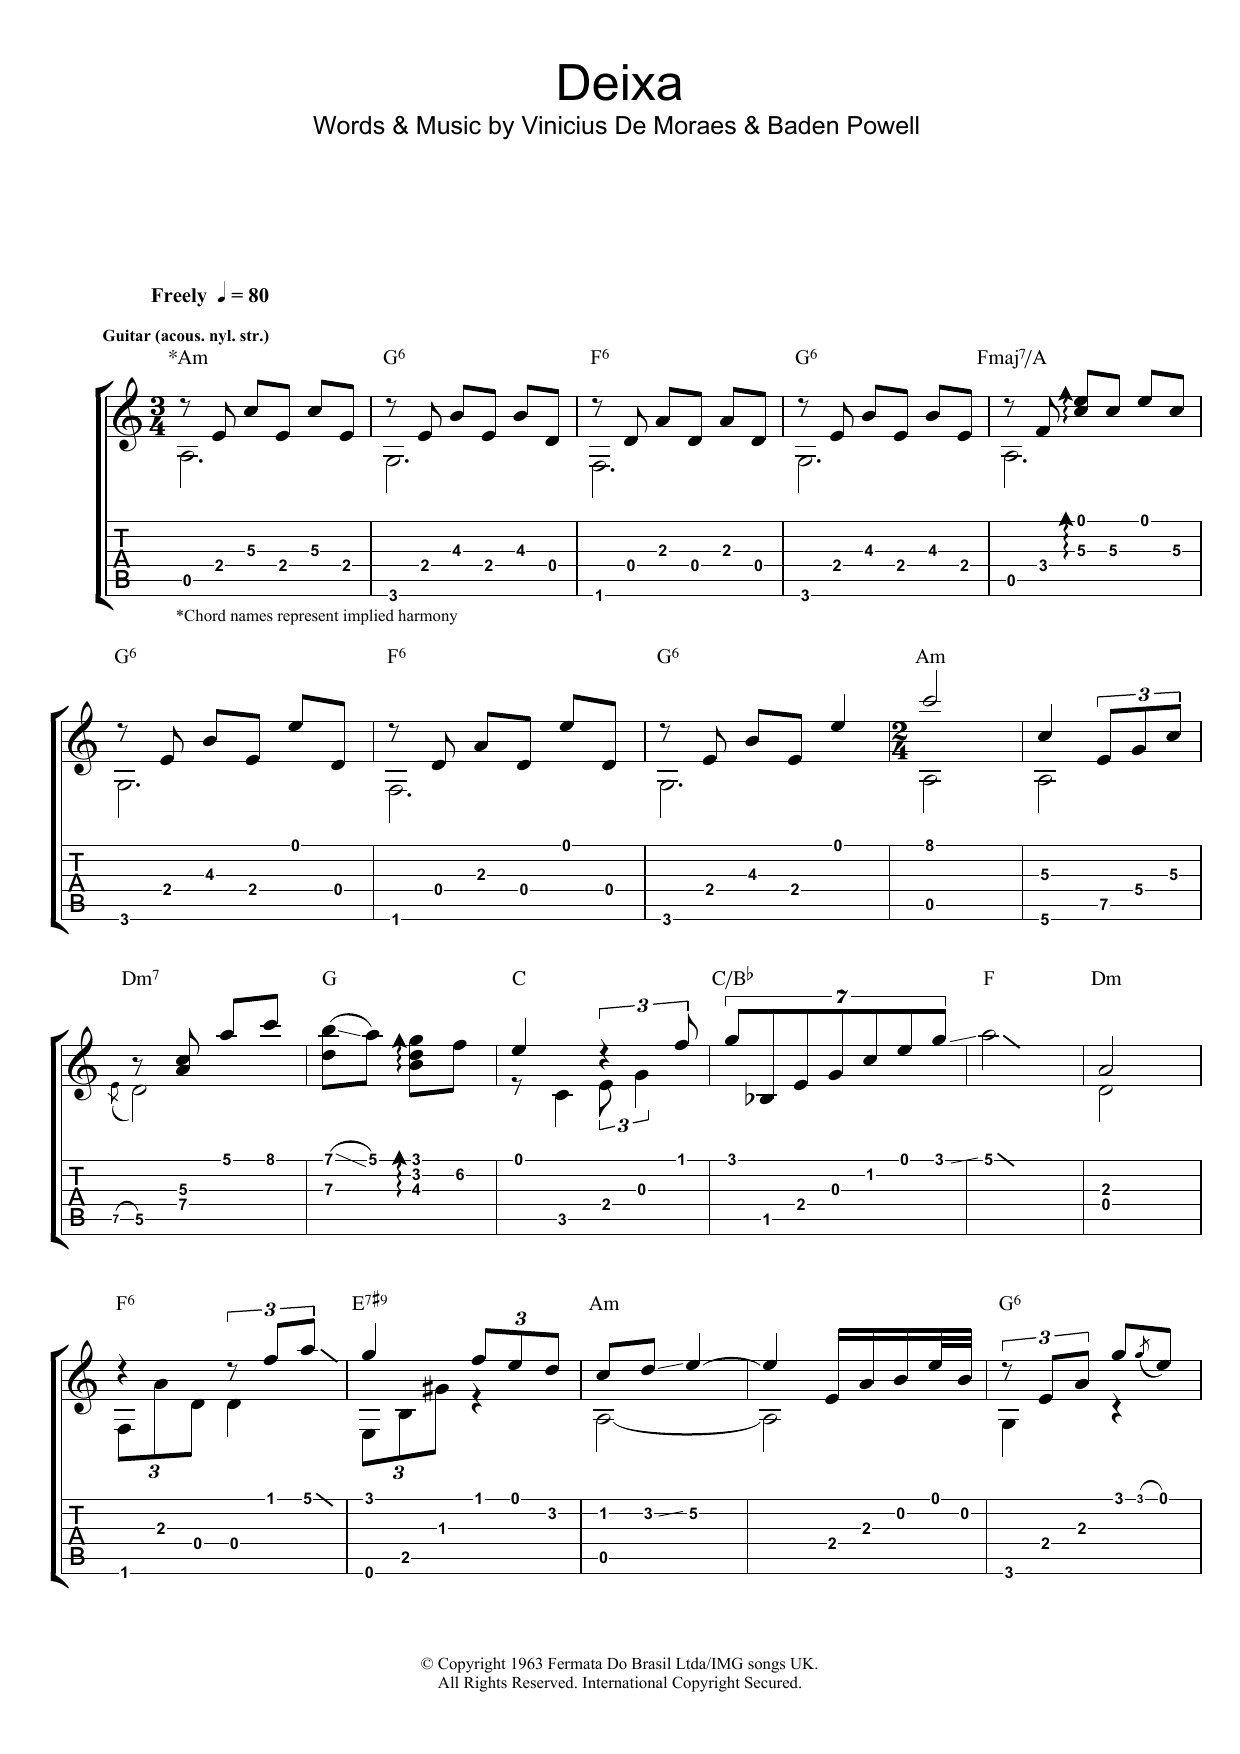 Baden Powell Deixa Sheet Music Notes & Chords for Guitar Tab - Download or Print PDF